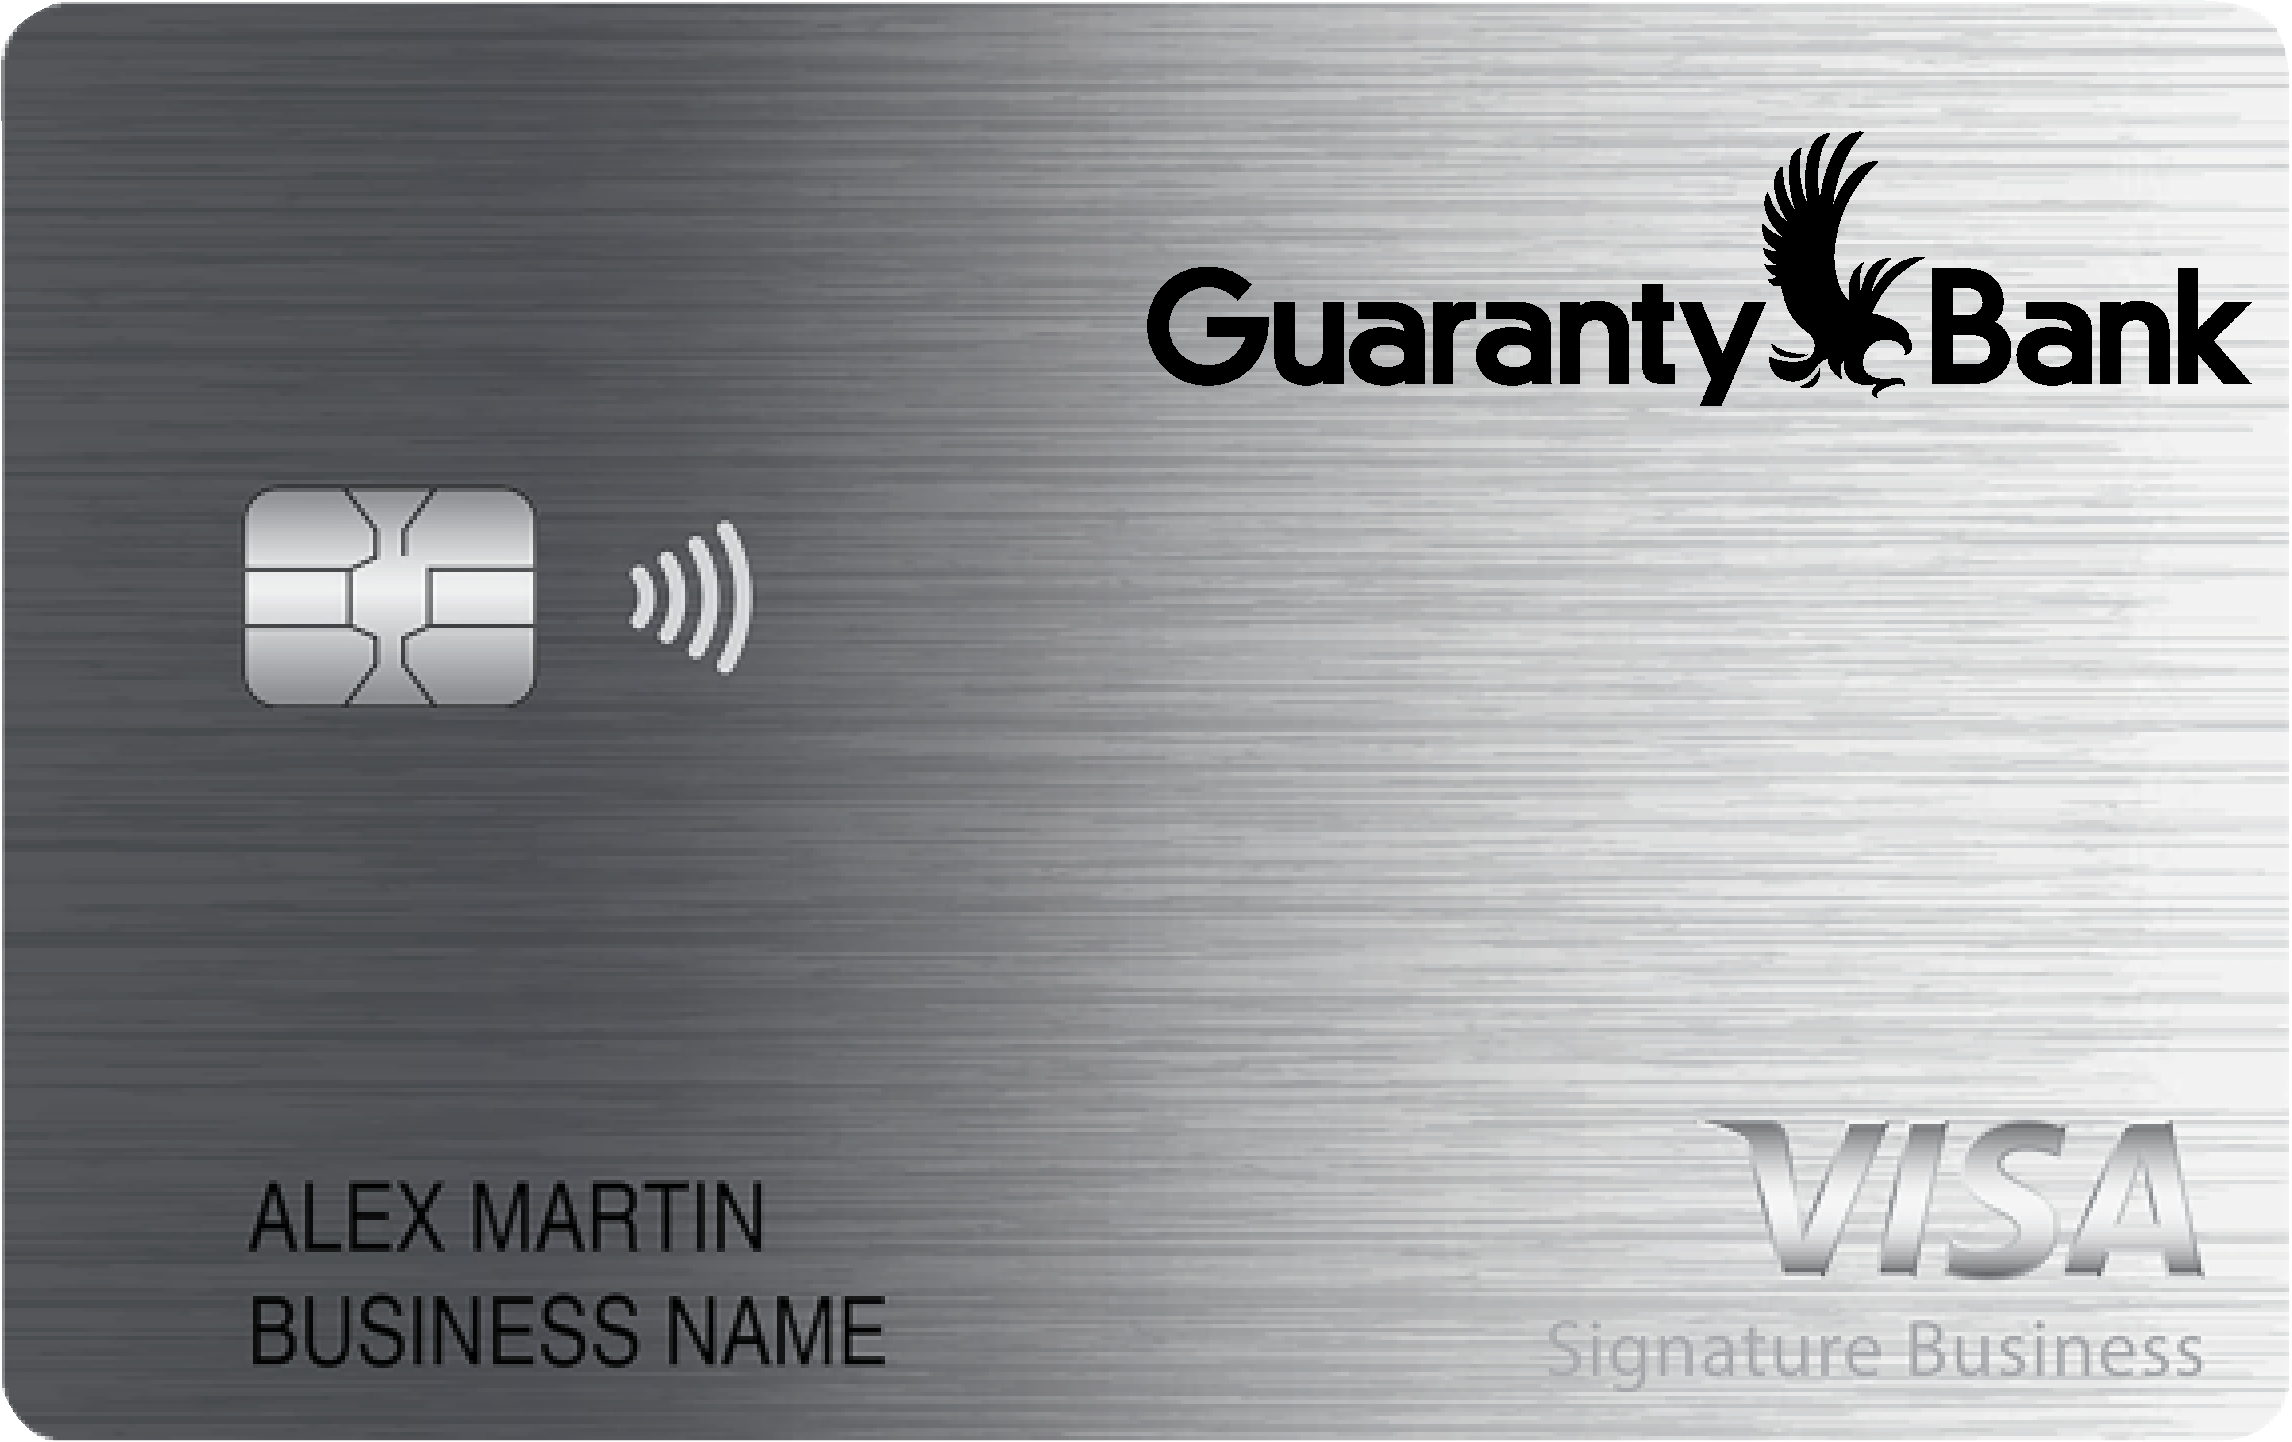 Guaranty Bank Smart Business Rewards Card